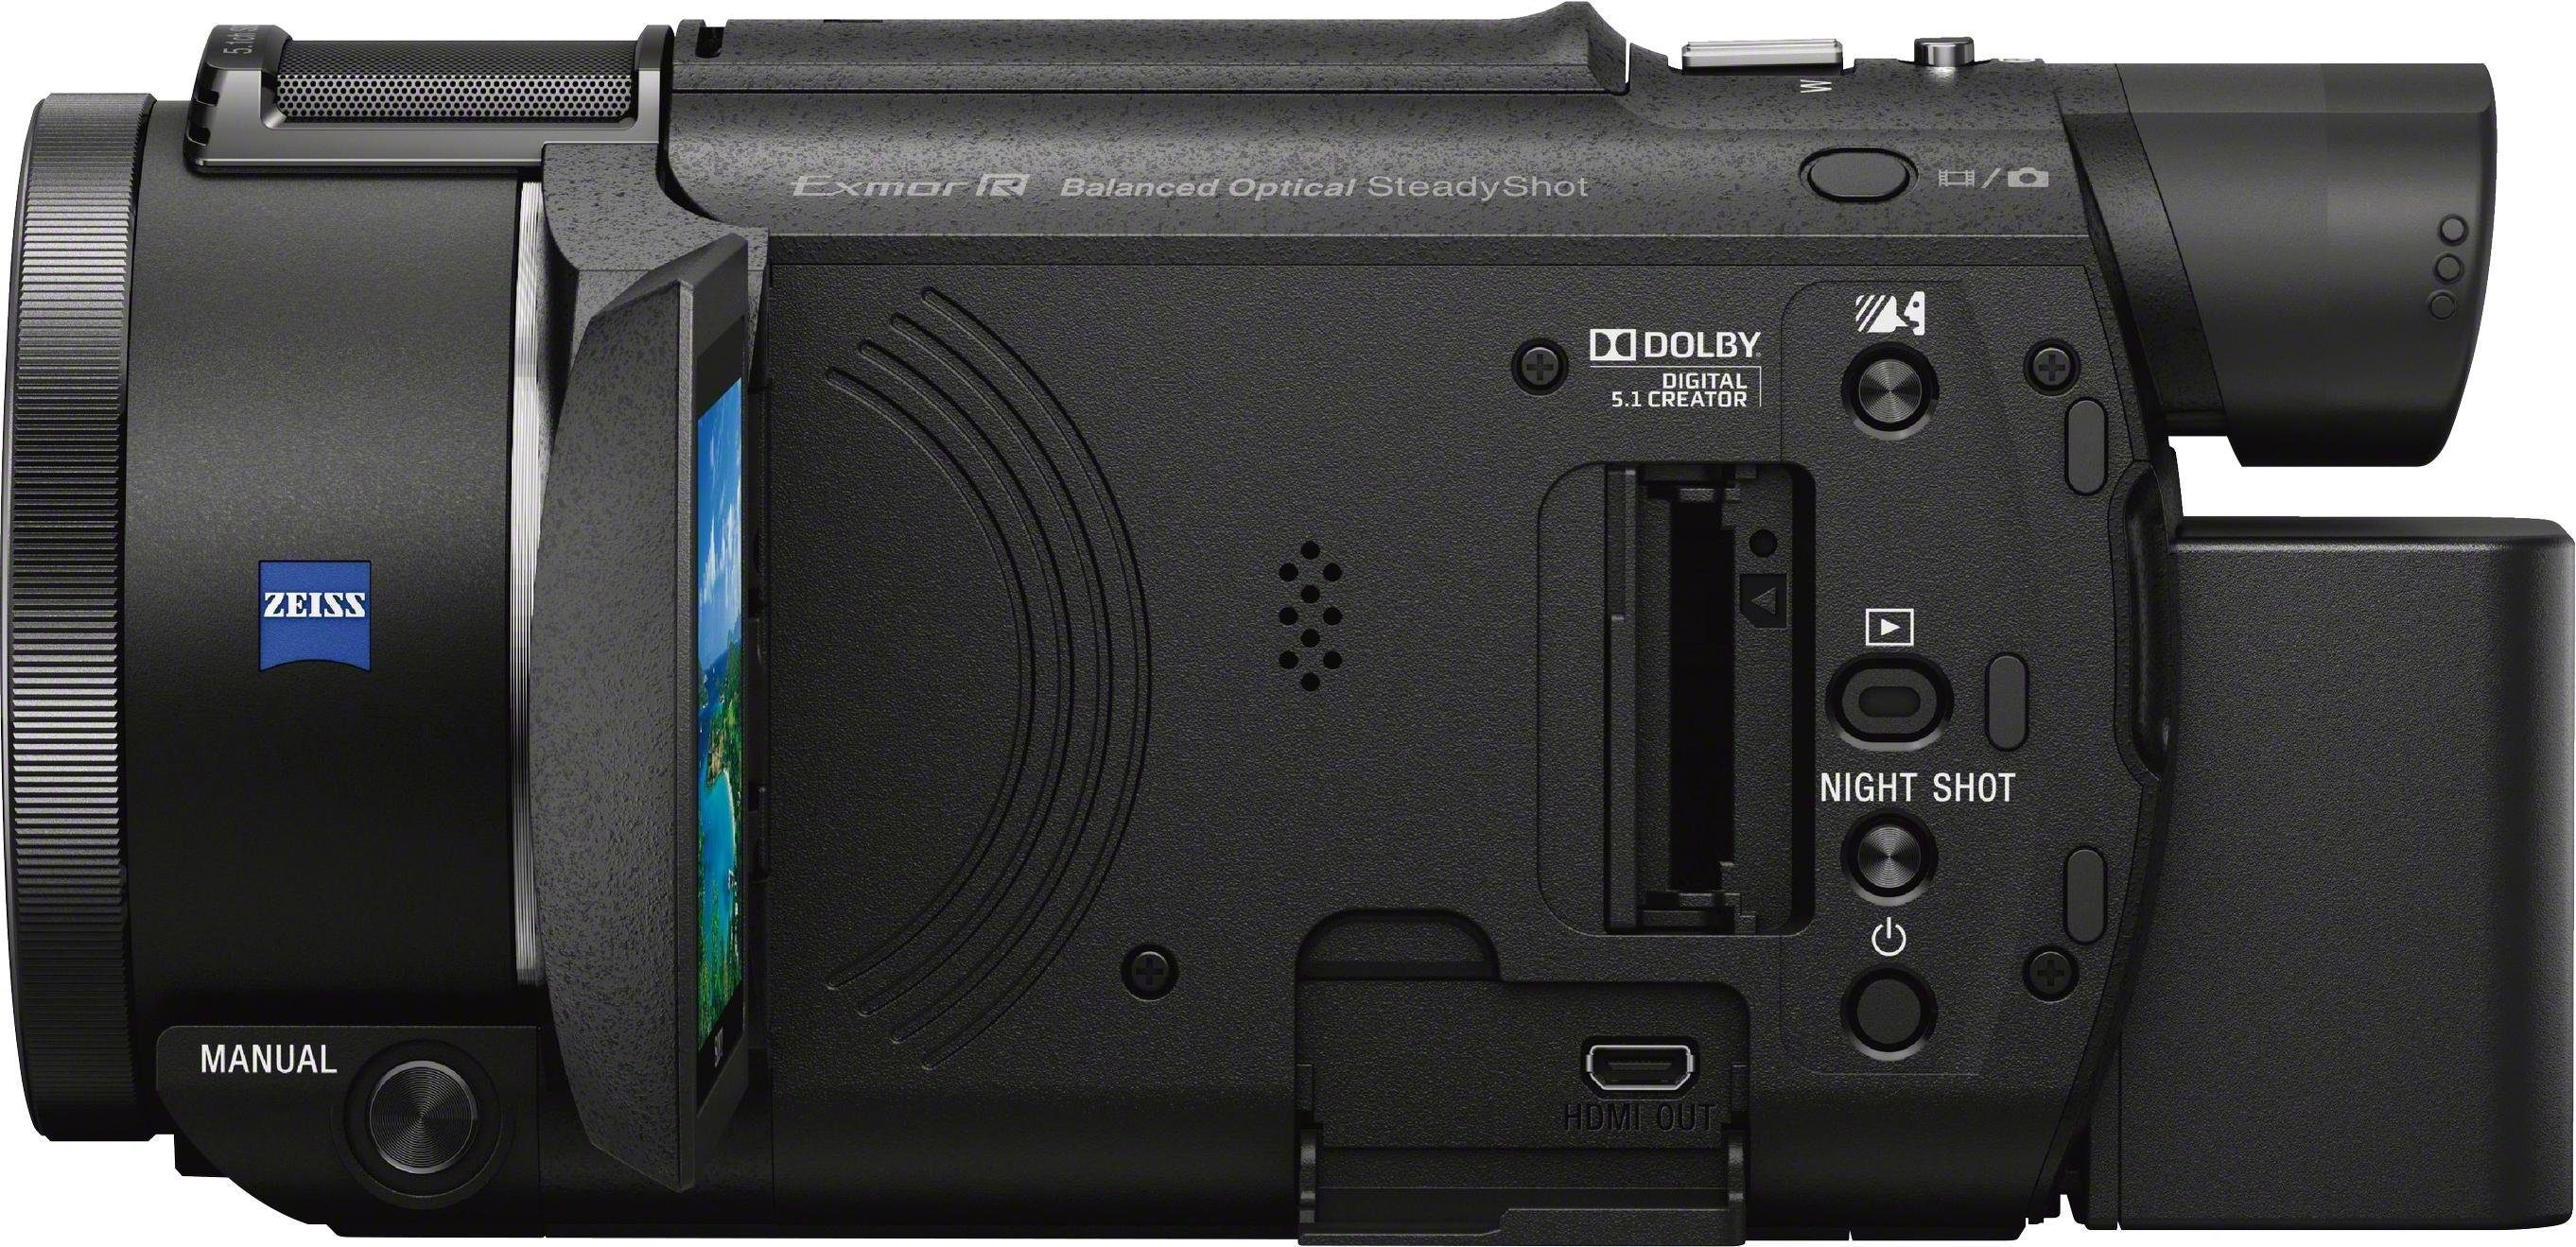 Sony FDRAX53.CEN HD, (Wi-Fi), Ultra Zoom) (4K opt. WLAN NFC, Camcorder 20x